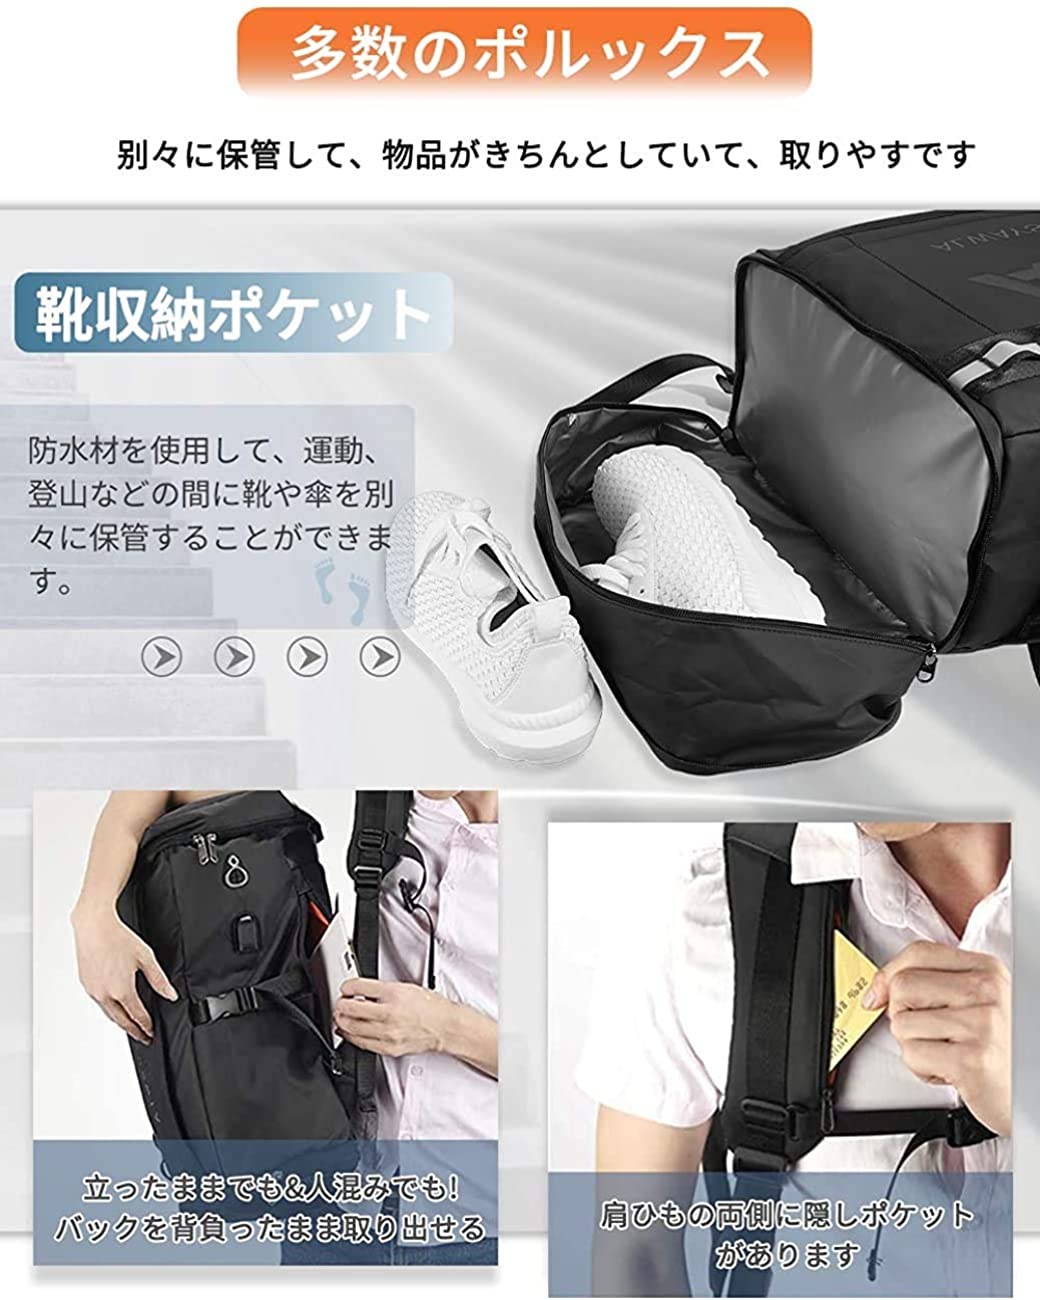 <transcy>AISFA backpack large capacity waterproof fabric with USB charging port Unisex</transcy>